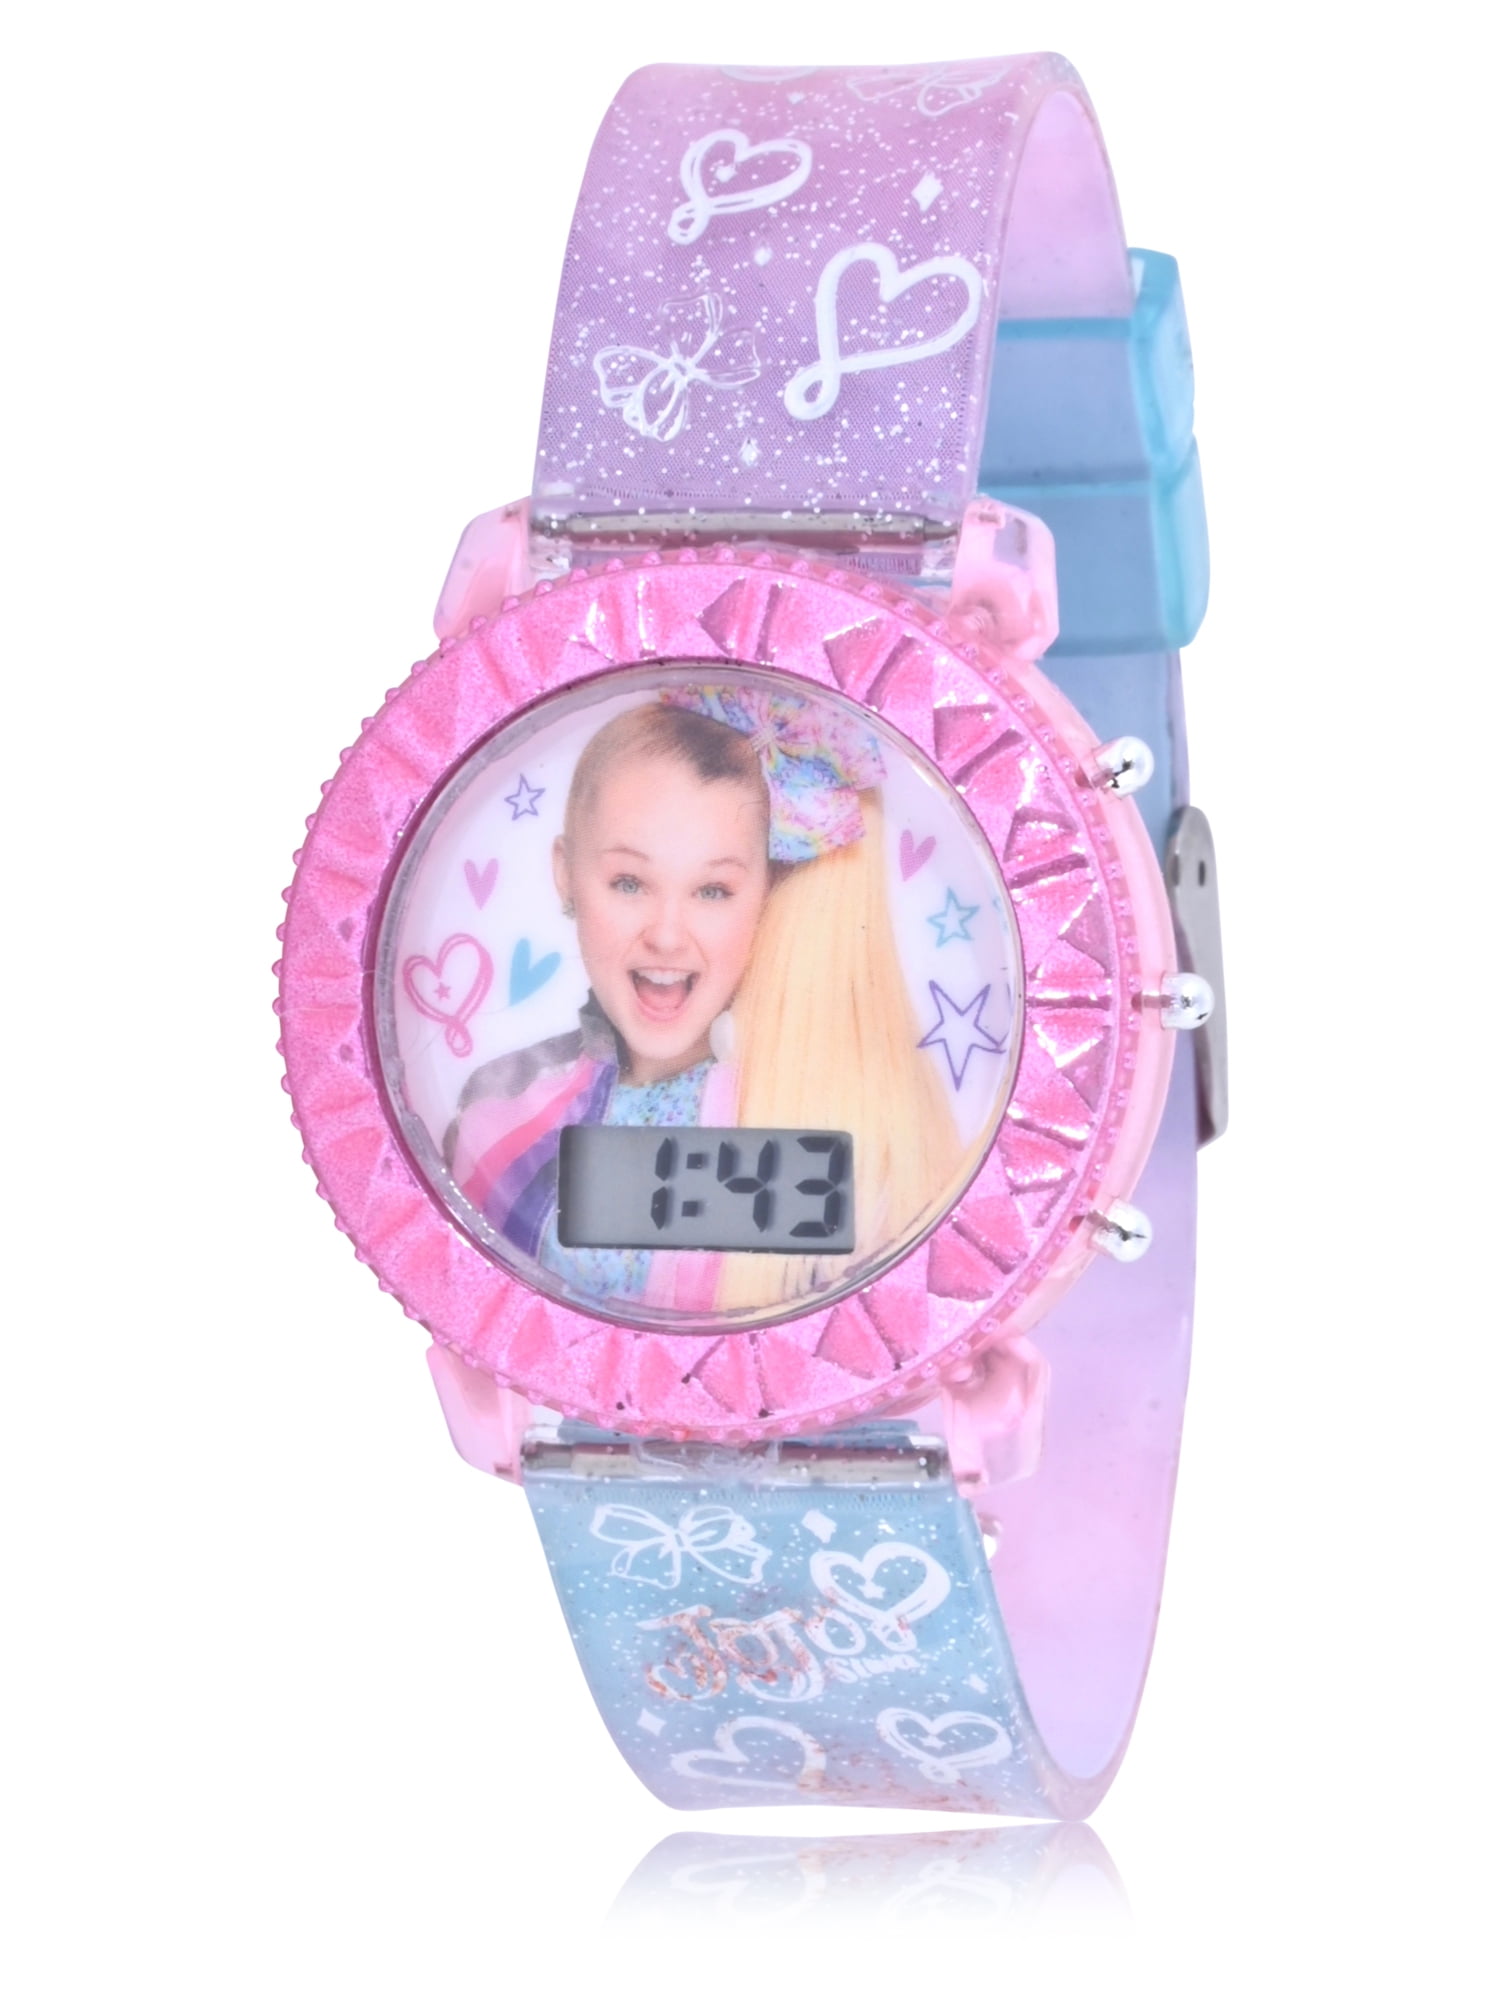 Nickelodeon Jojo Siwa Unisex Child Flashing LCD Watch and Hair Ties Bracelet Set - JOJ4388WM